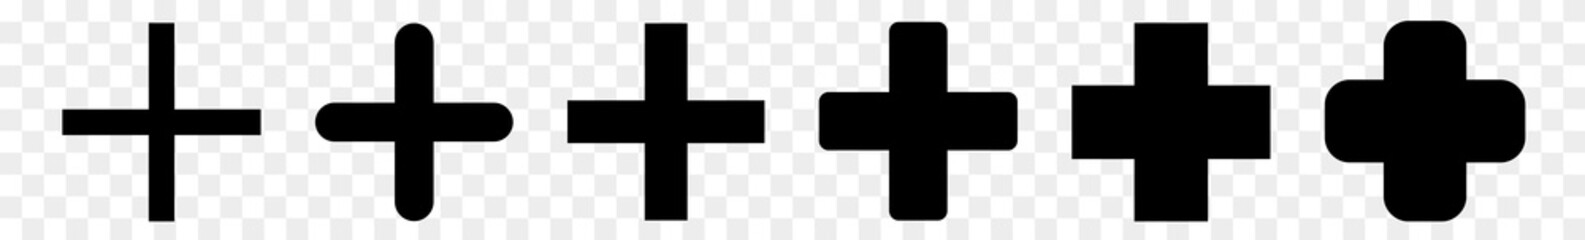 plus icon black | pluses | cross symbol | addition logo | positive sign | isolated transparent | var